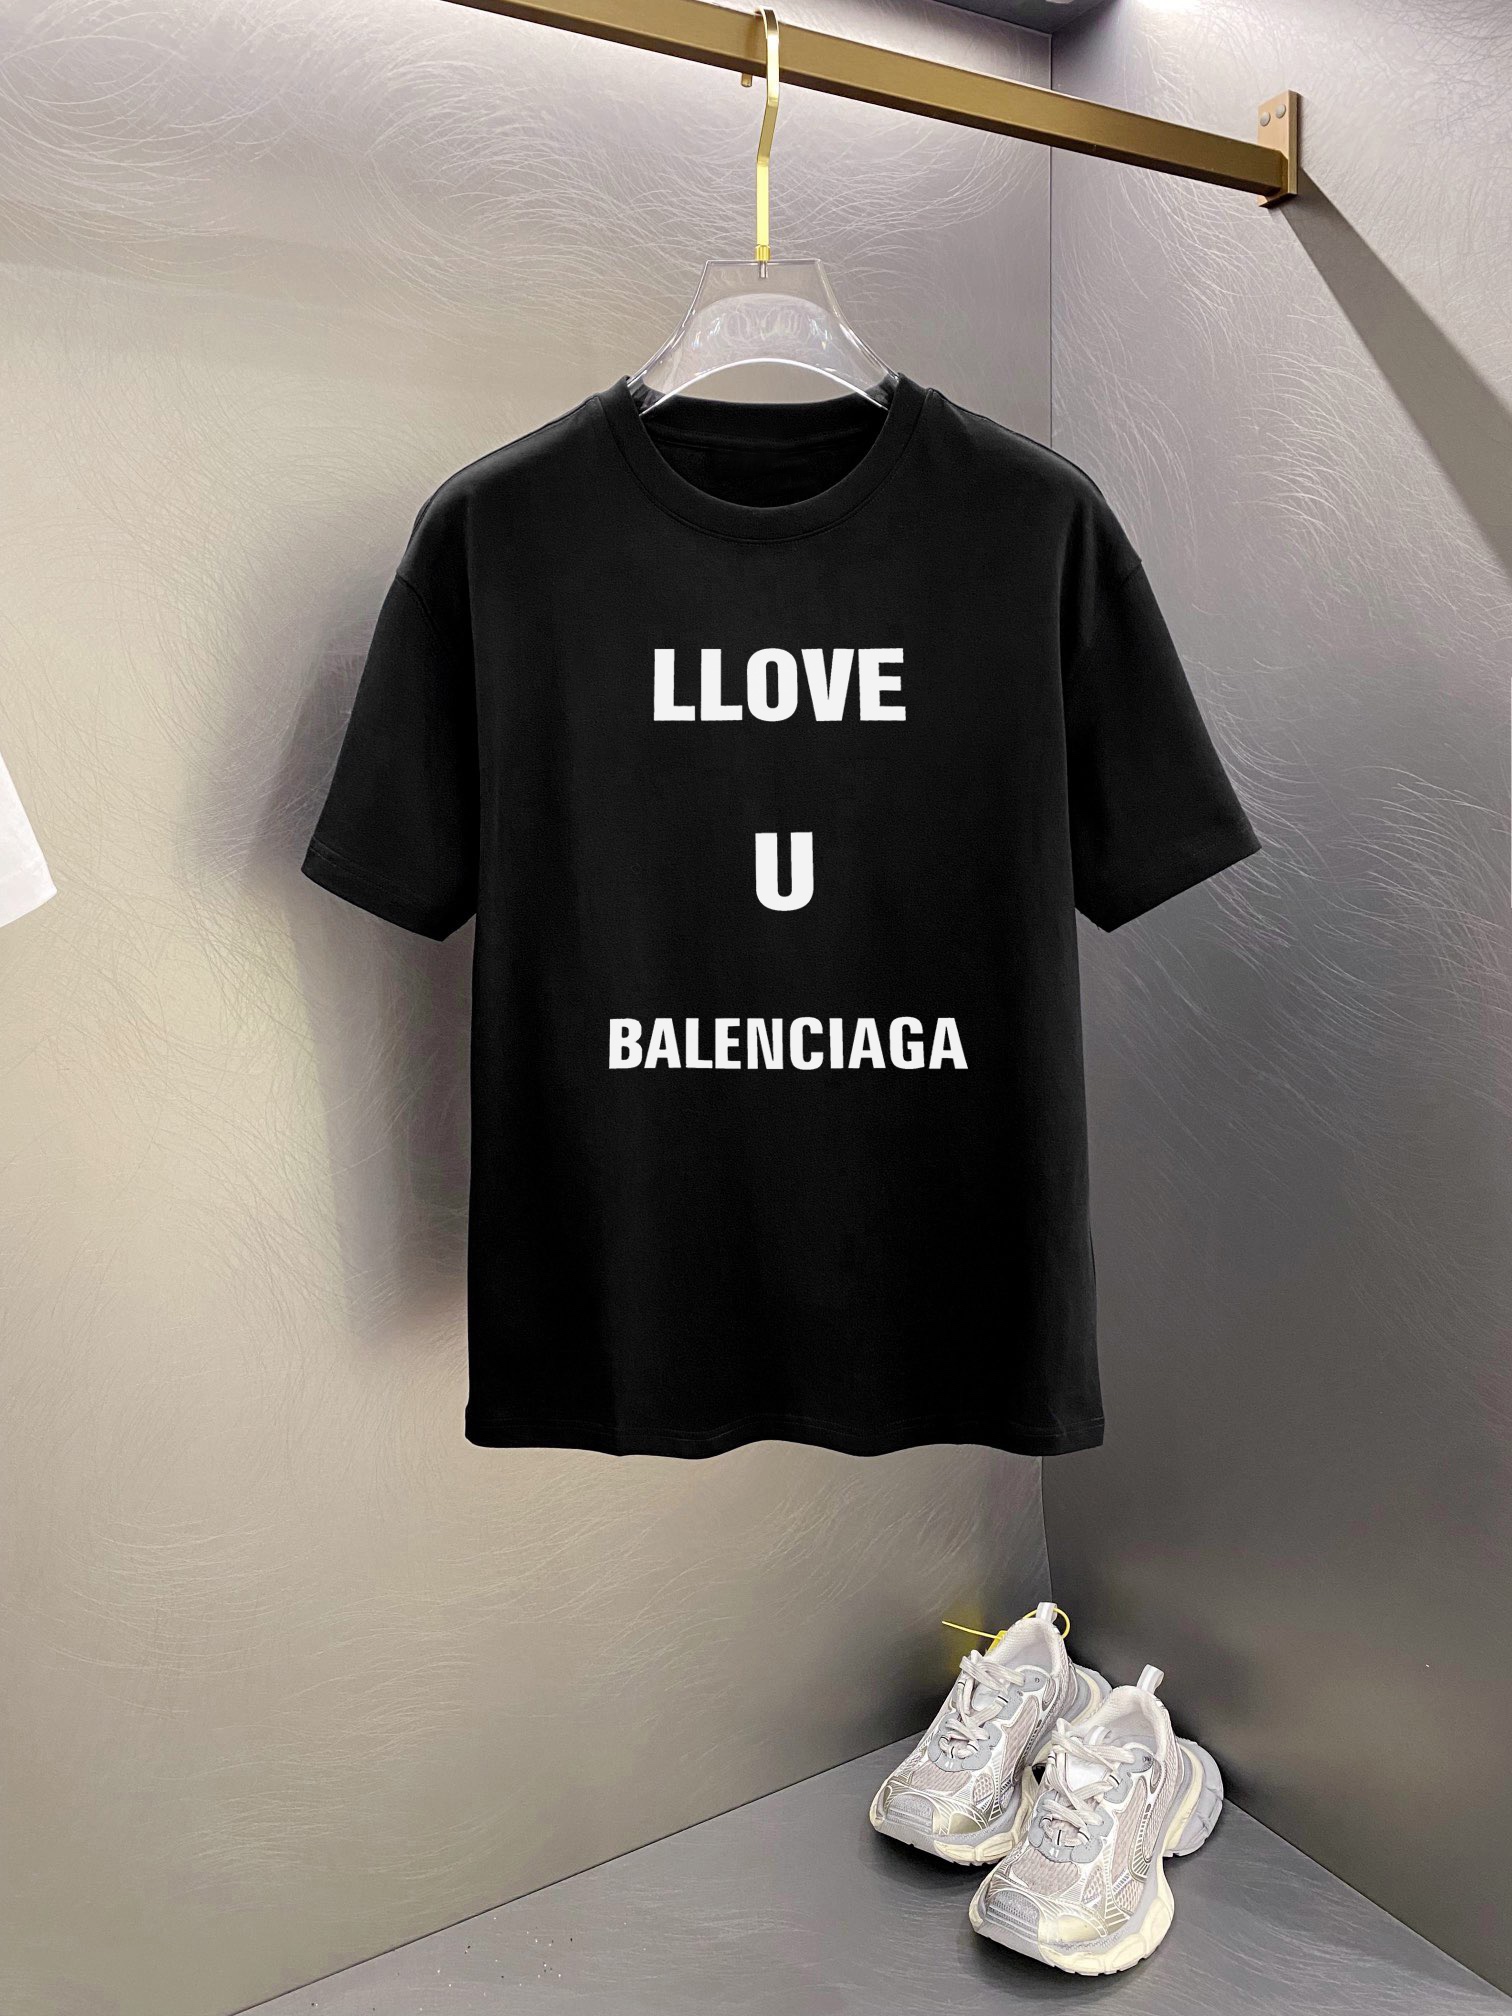 Balenciaga Clothing T-Shirt Black White Printing Cotton Short Sleeve